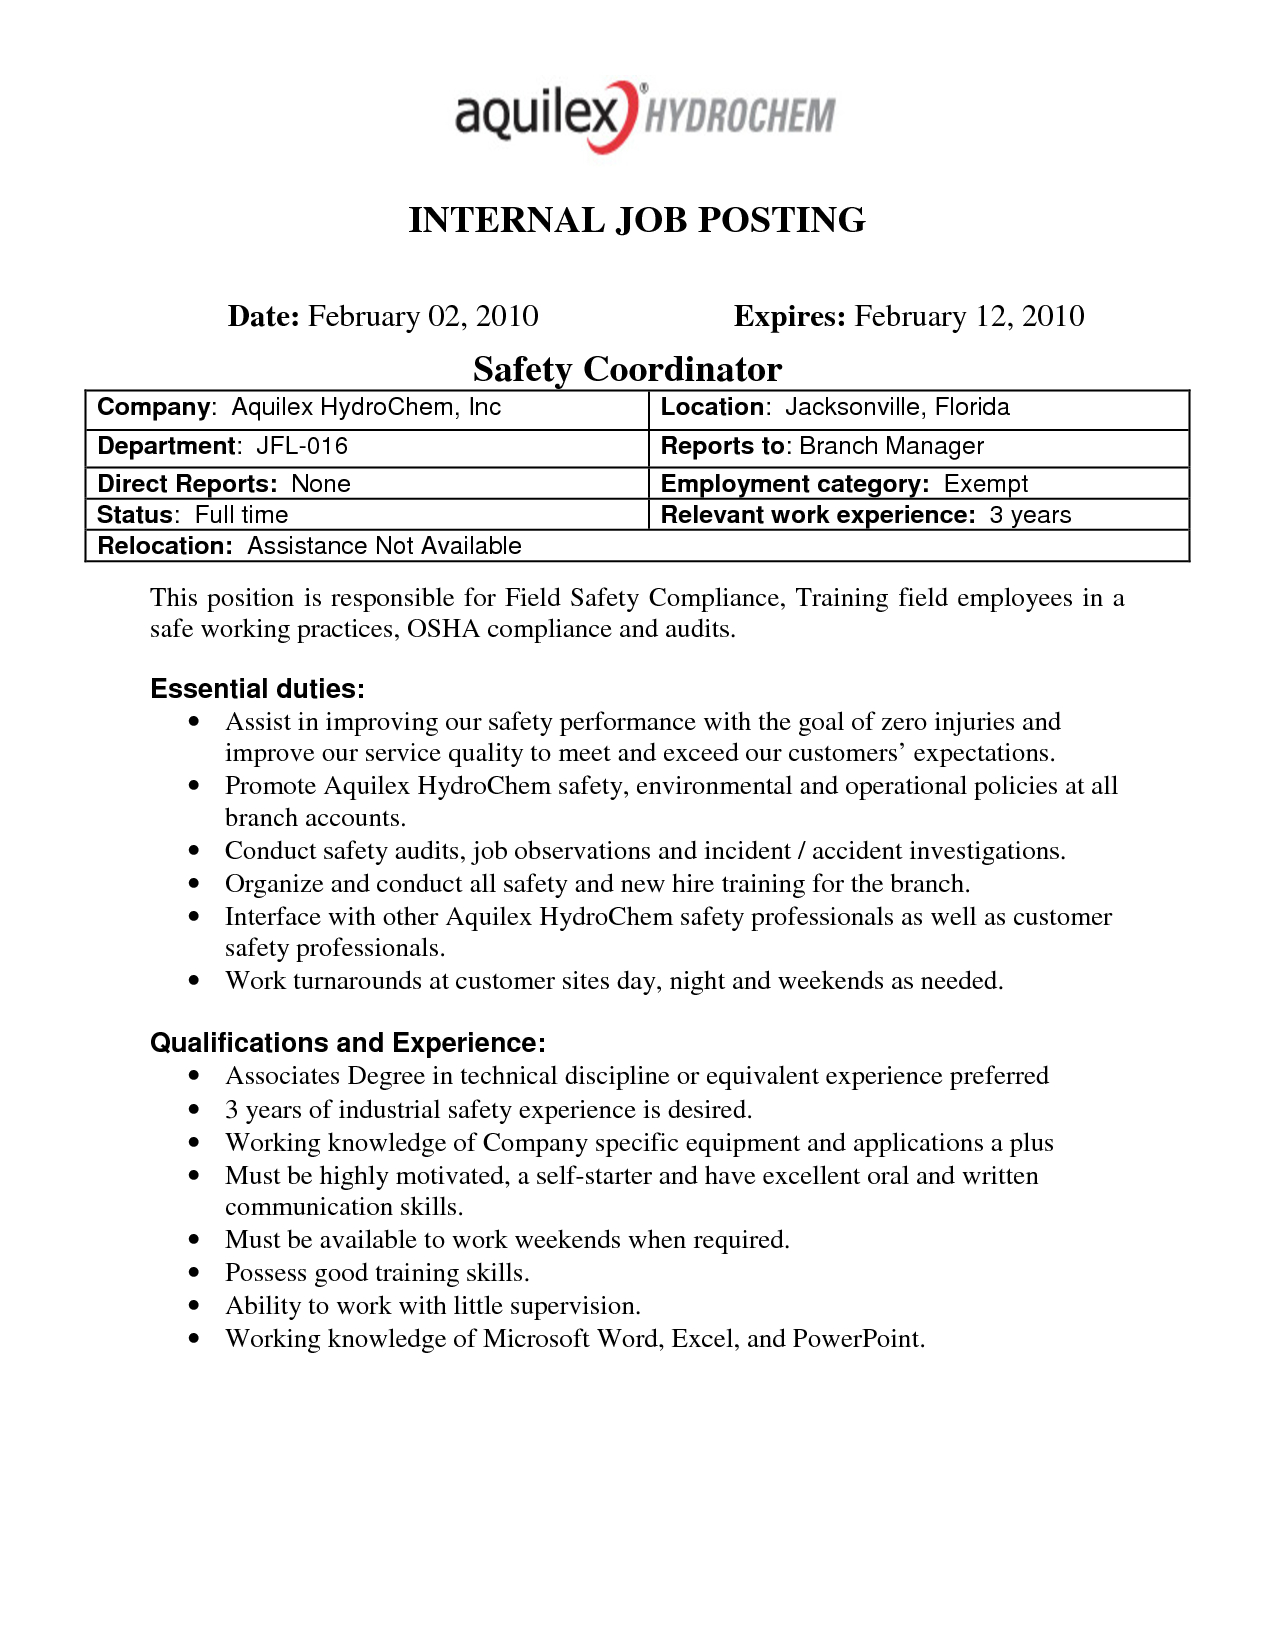 Best Photos Of Internal Job Posting Template Word – Resume For Internal Job Posting Template Word